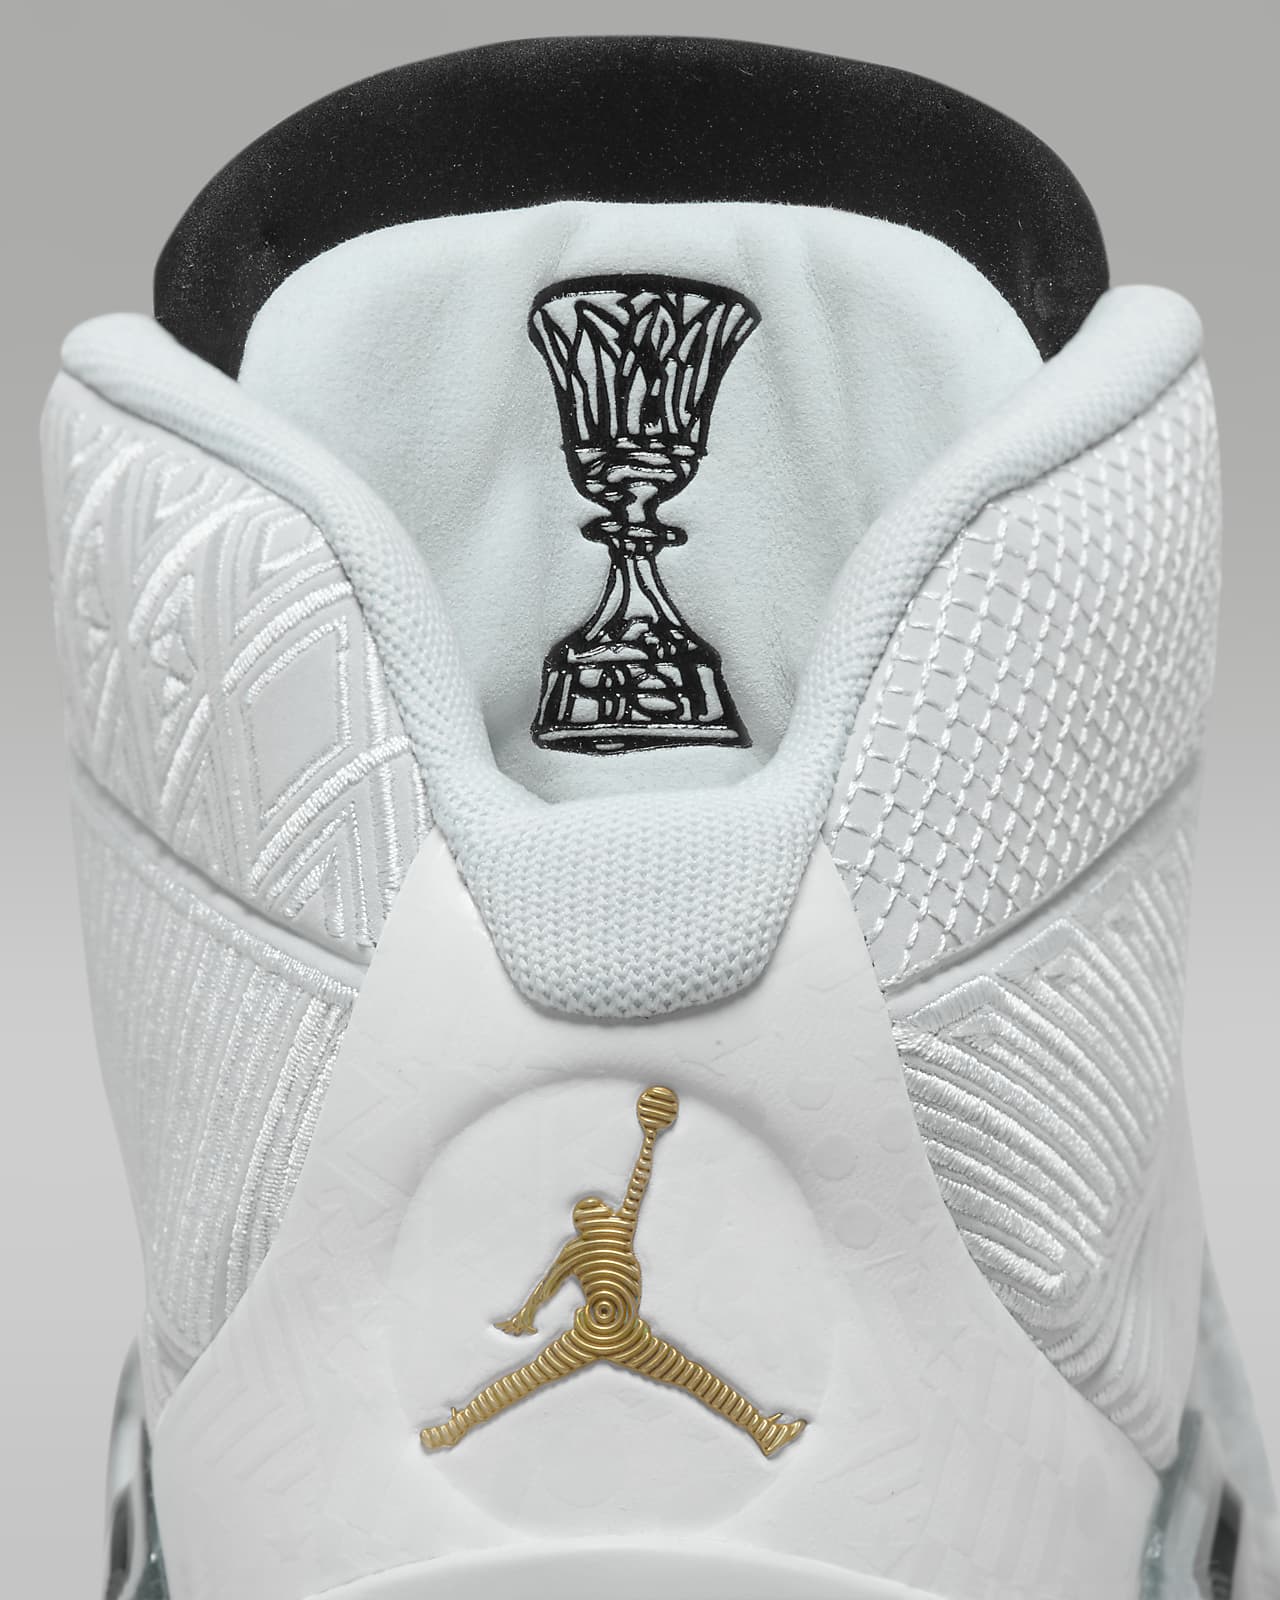 Two New Air Jordan 12 Low Golf Colourways Revealed! - Sneaker Freaker